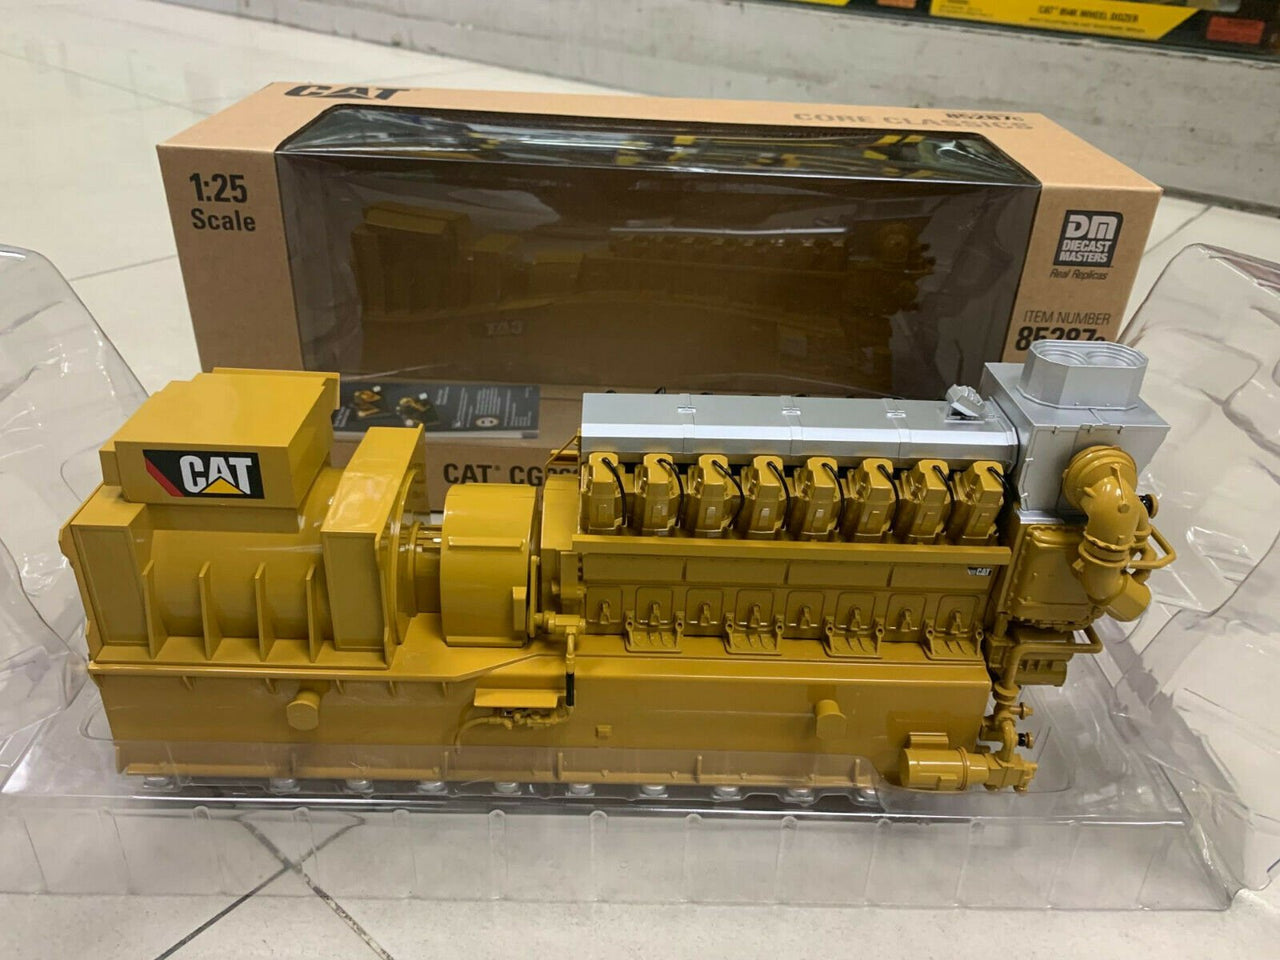 85287C Gas Generator Caterpillar CG260-16 Scale 1:25